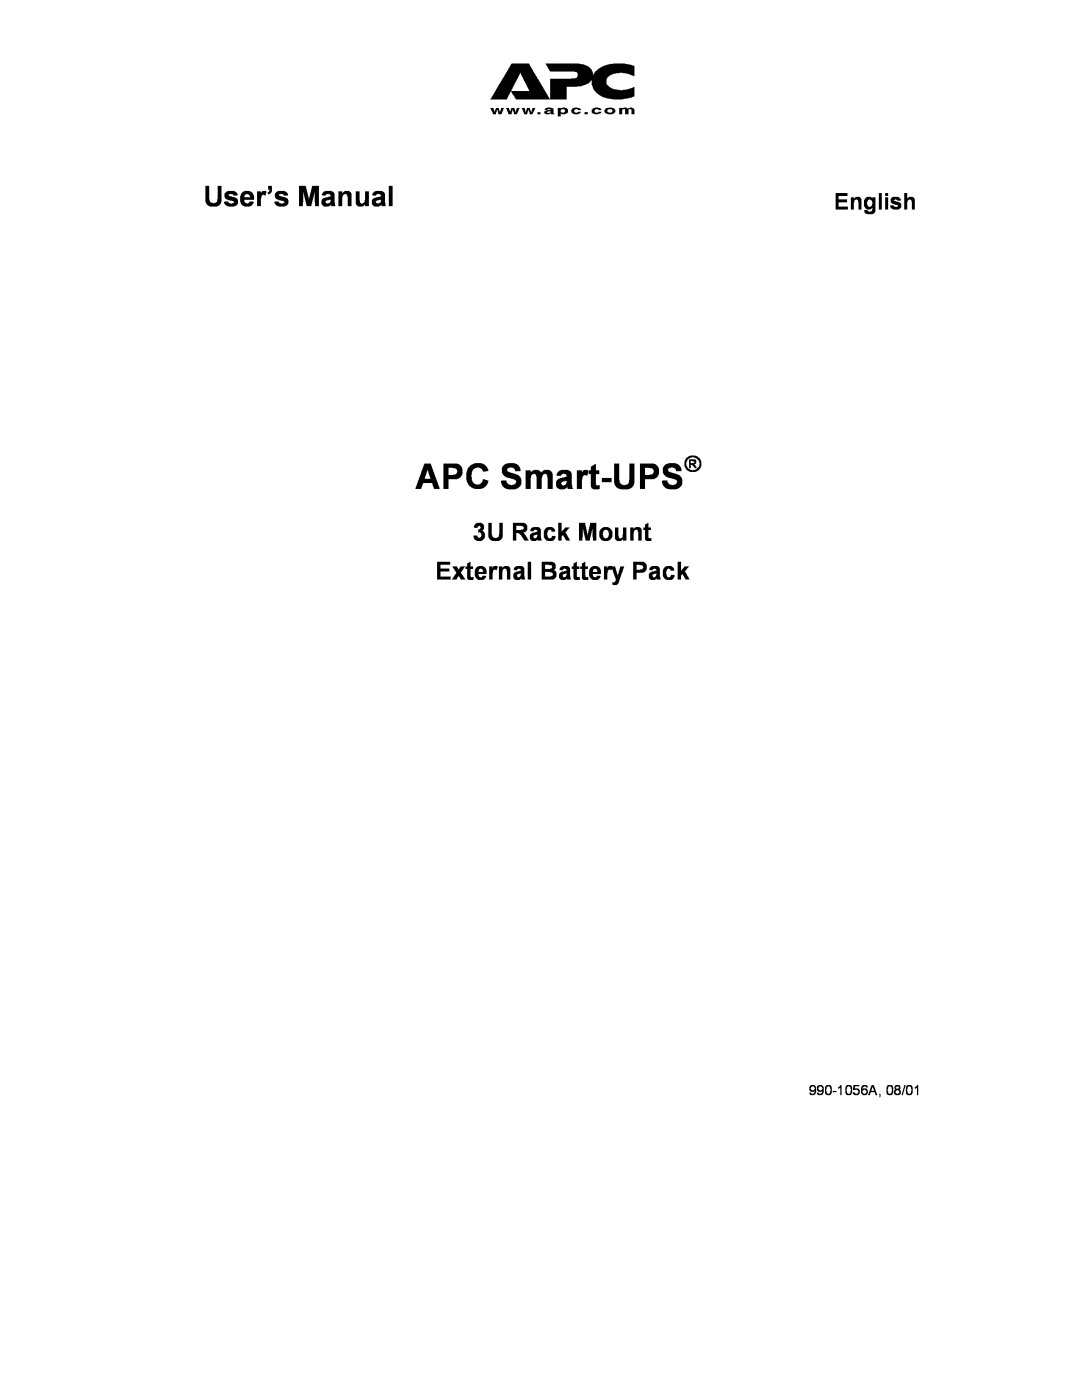 American Power Conversion user manual APC Smart-UPS, User’s Manual, 3U Rack Mount External Battery Pack, English 